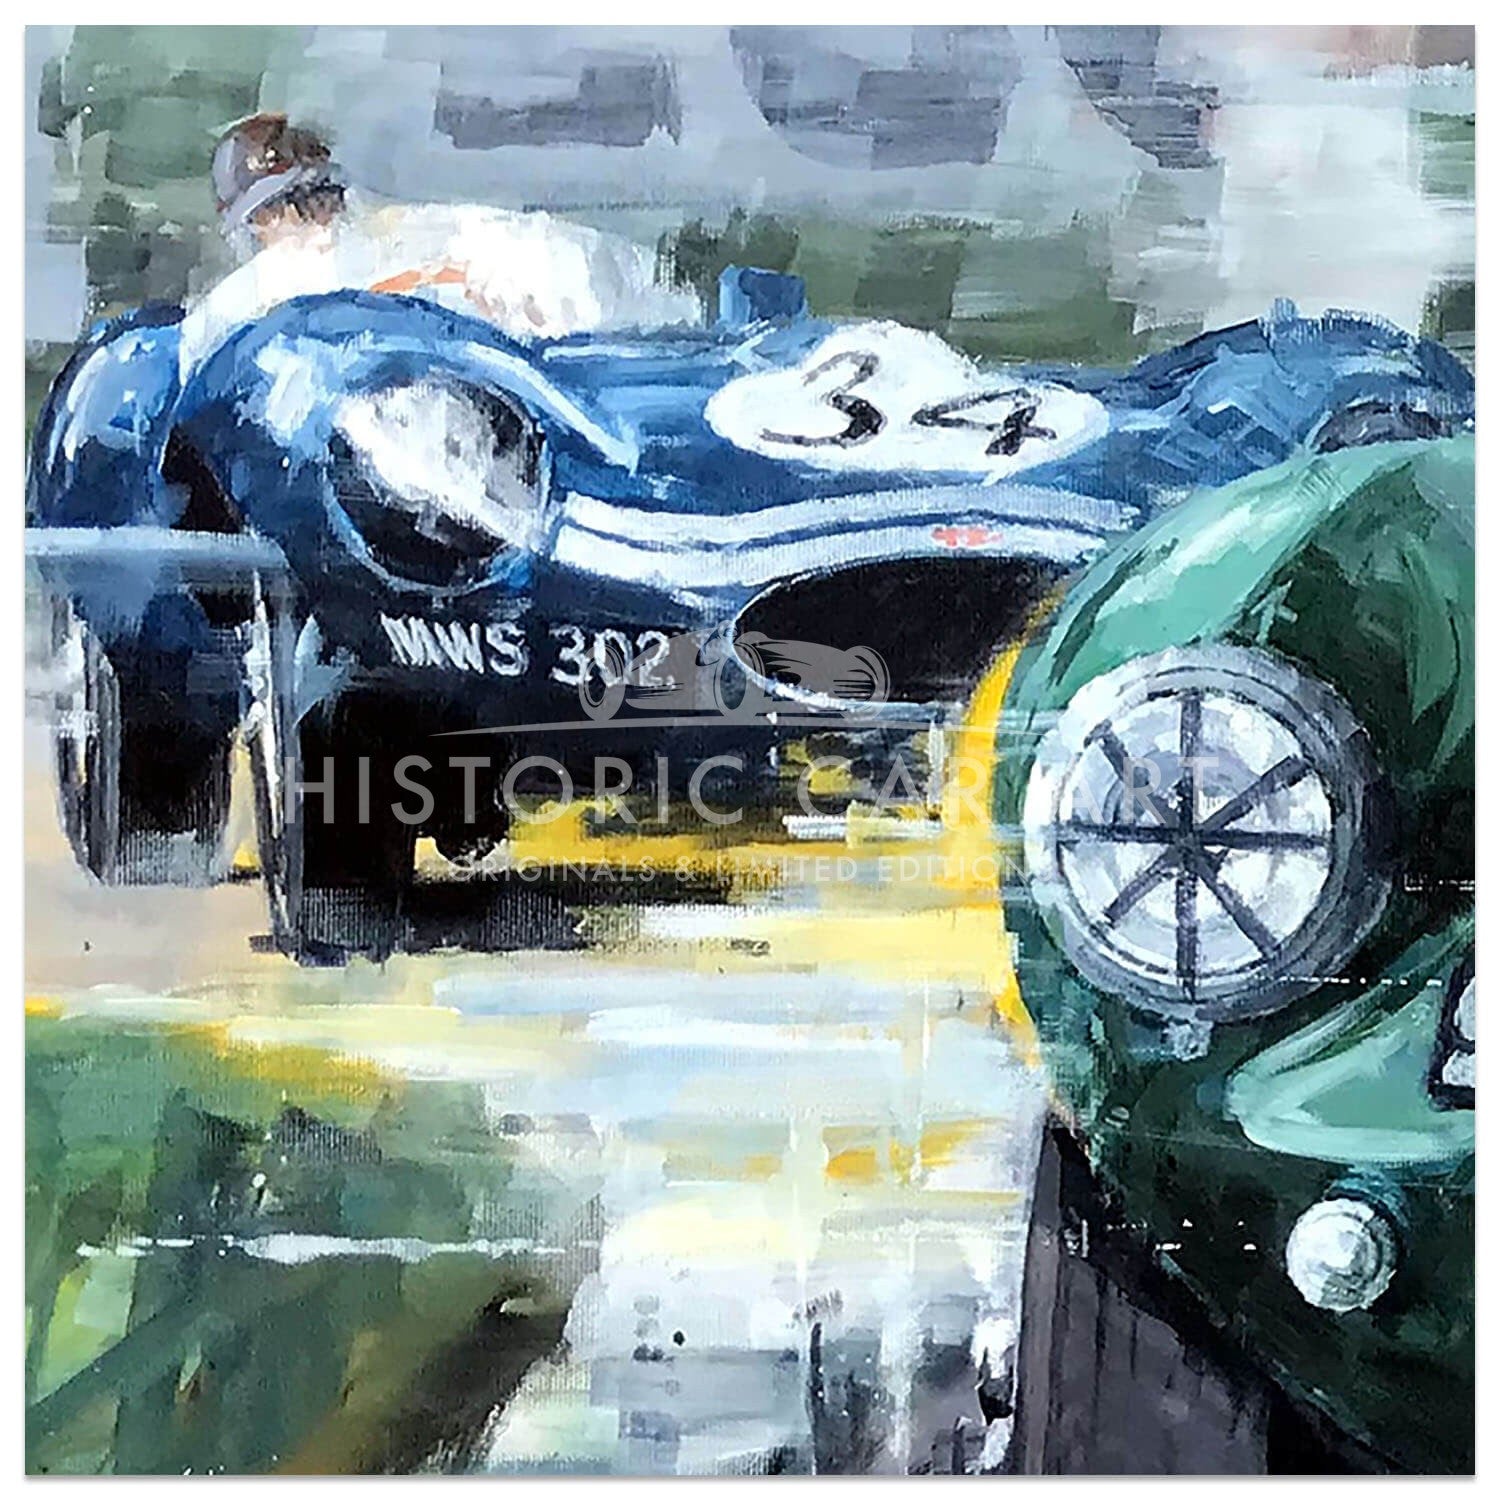 Aston Action | Aston Martin DB3S | Roy Salvador | 1956 Aintree 200 | Artwork